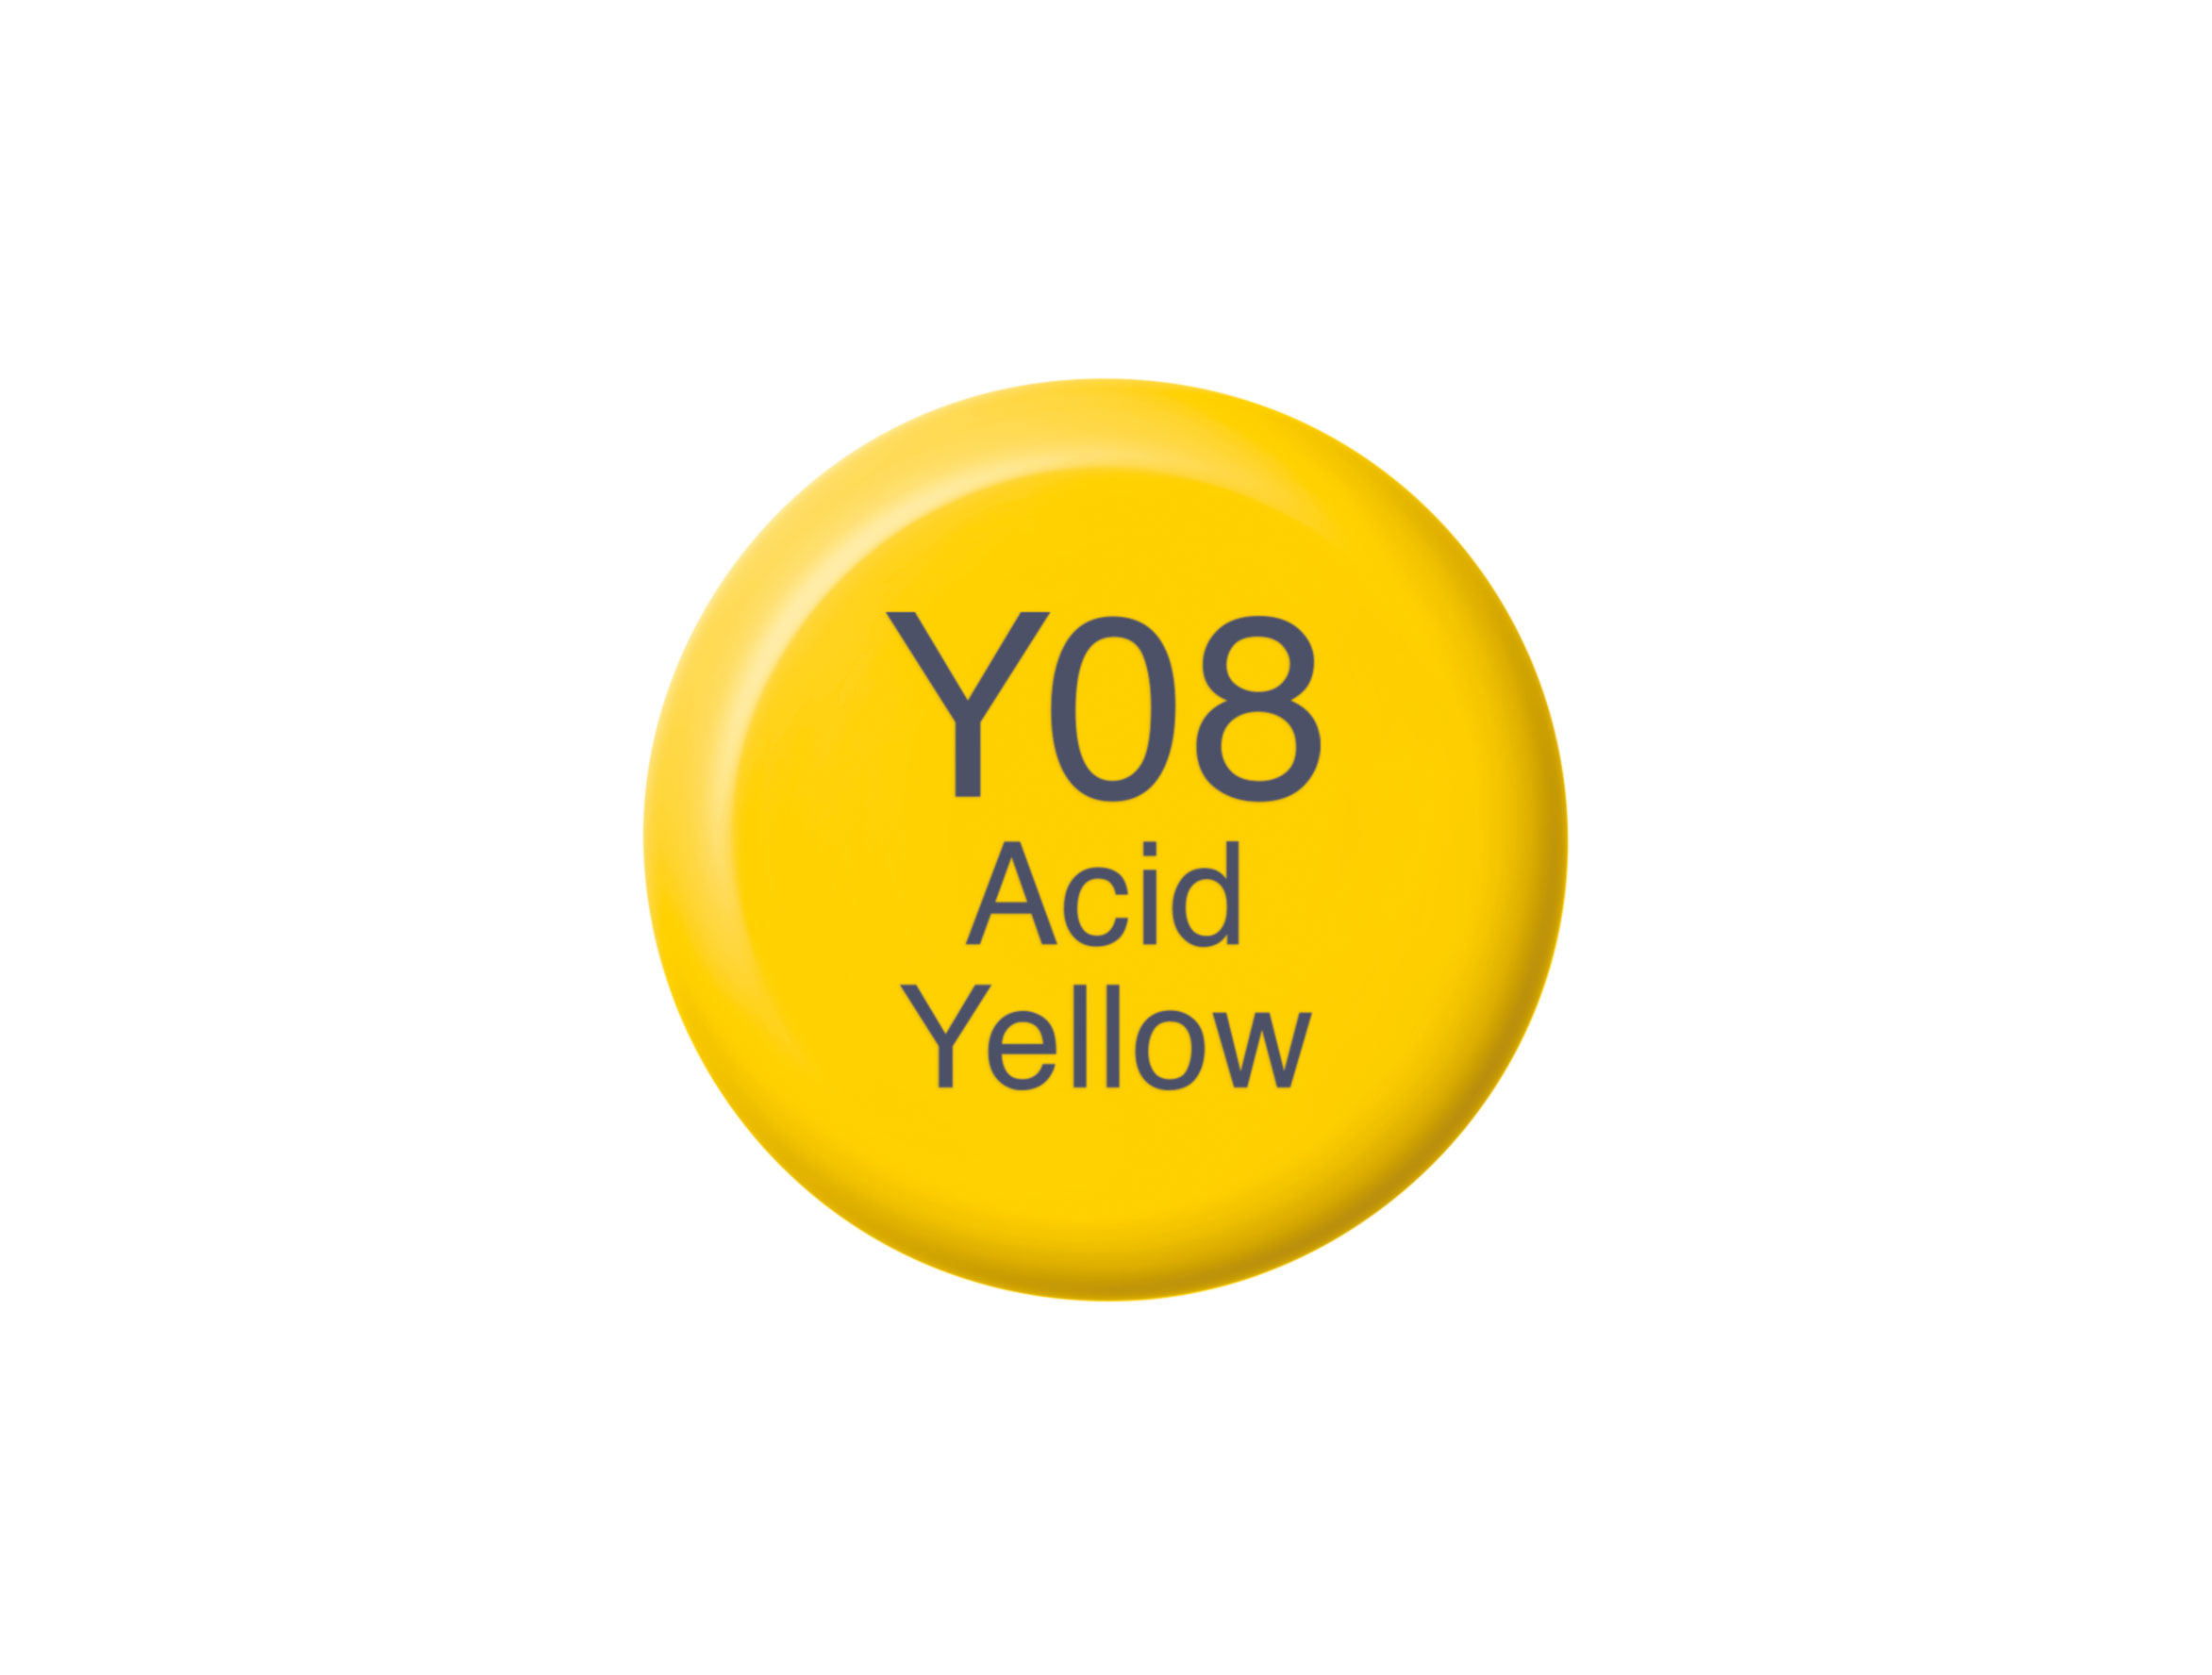 Copic Ink Y08 Acid Yellow